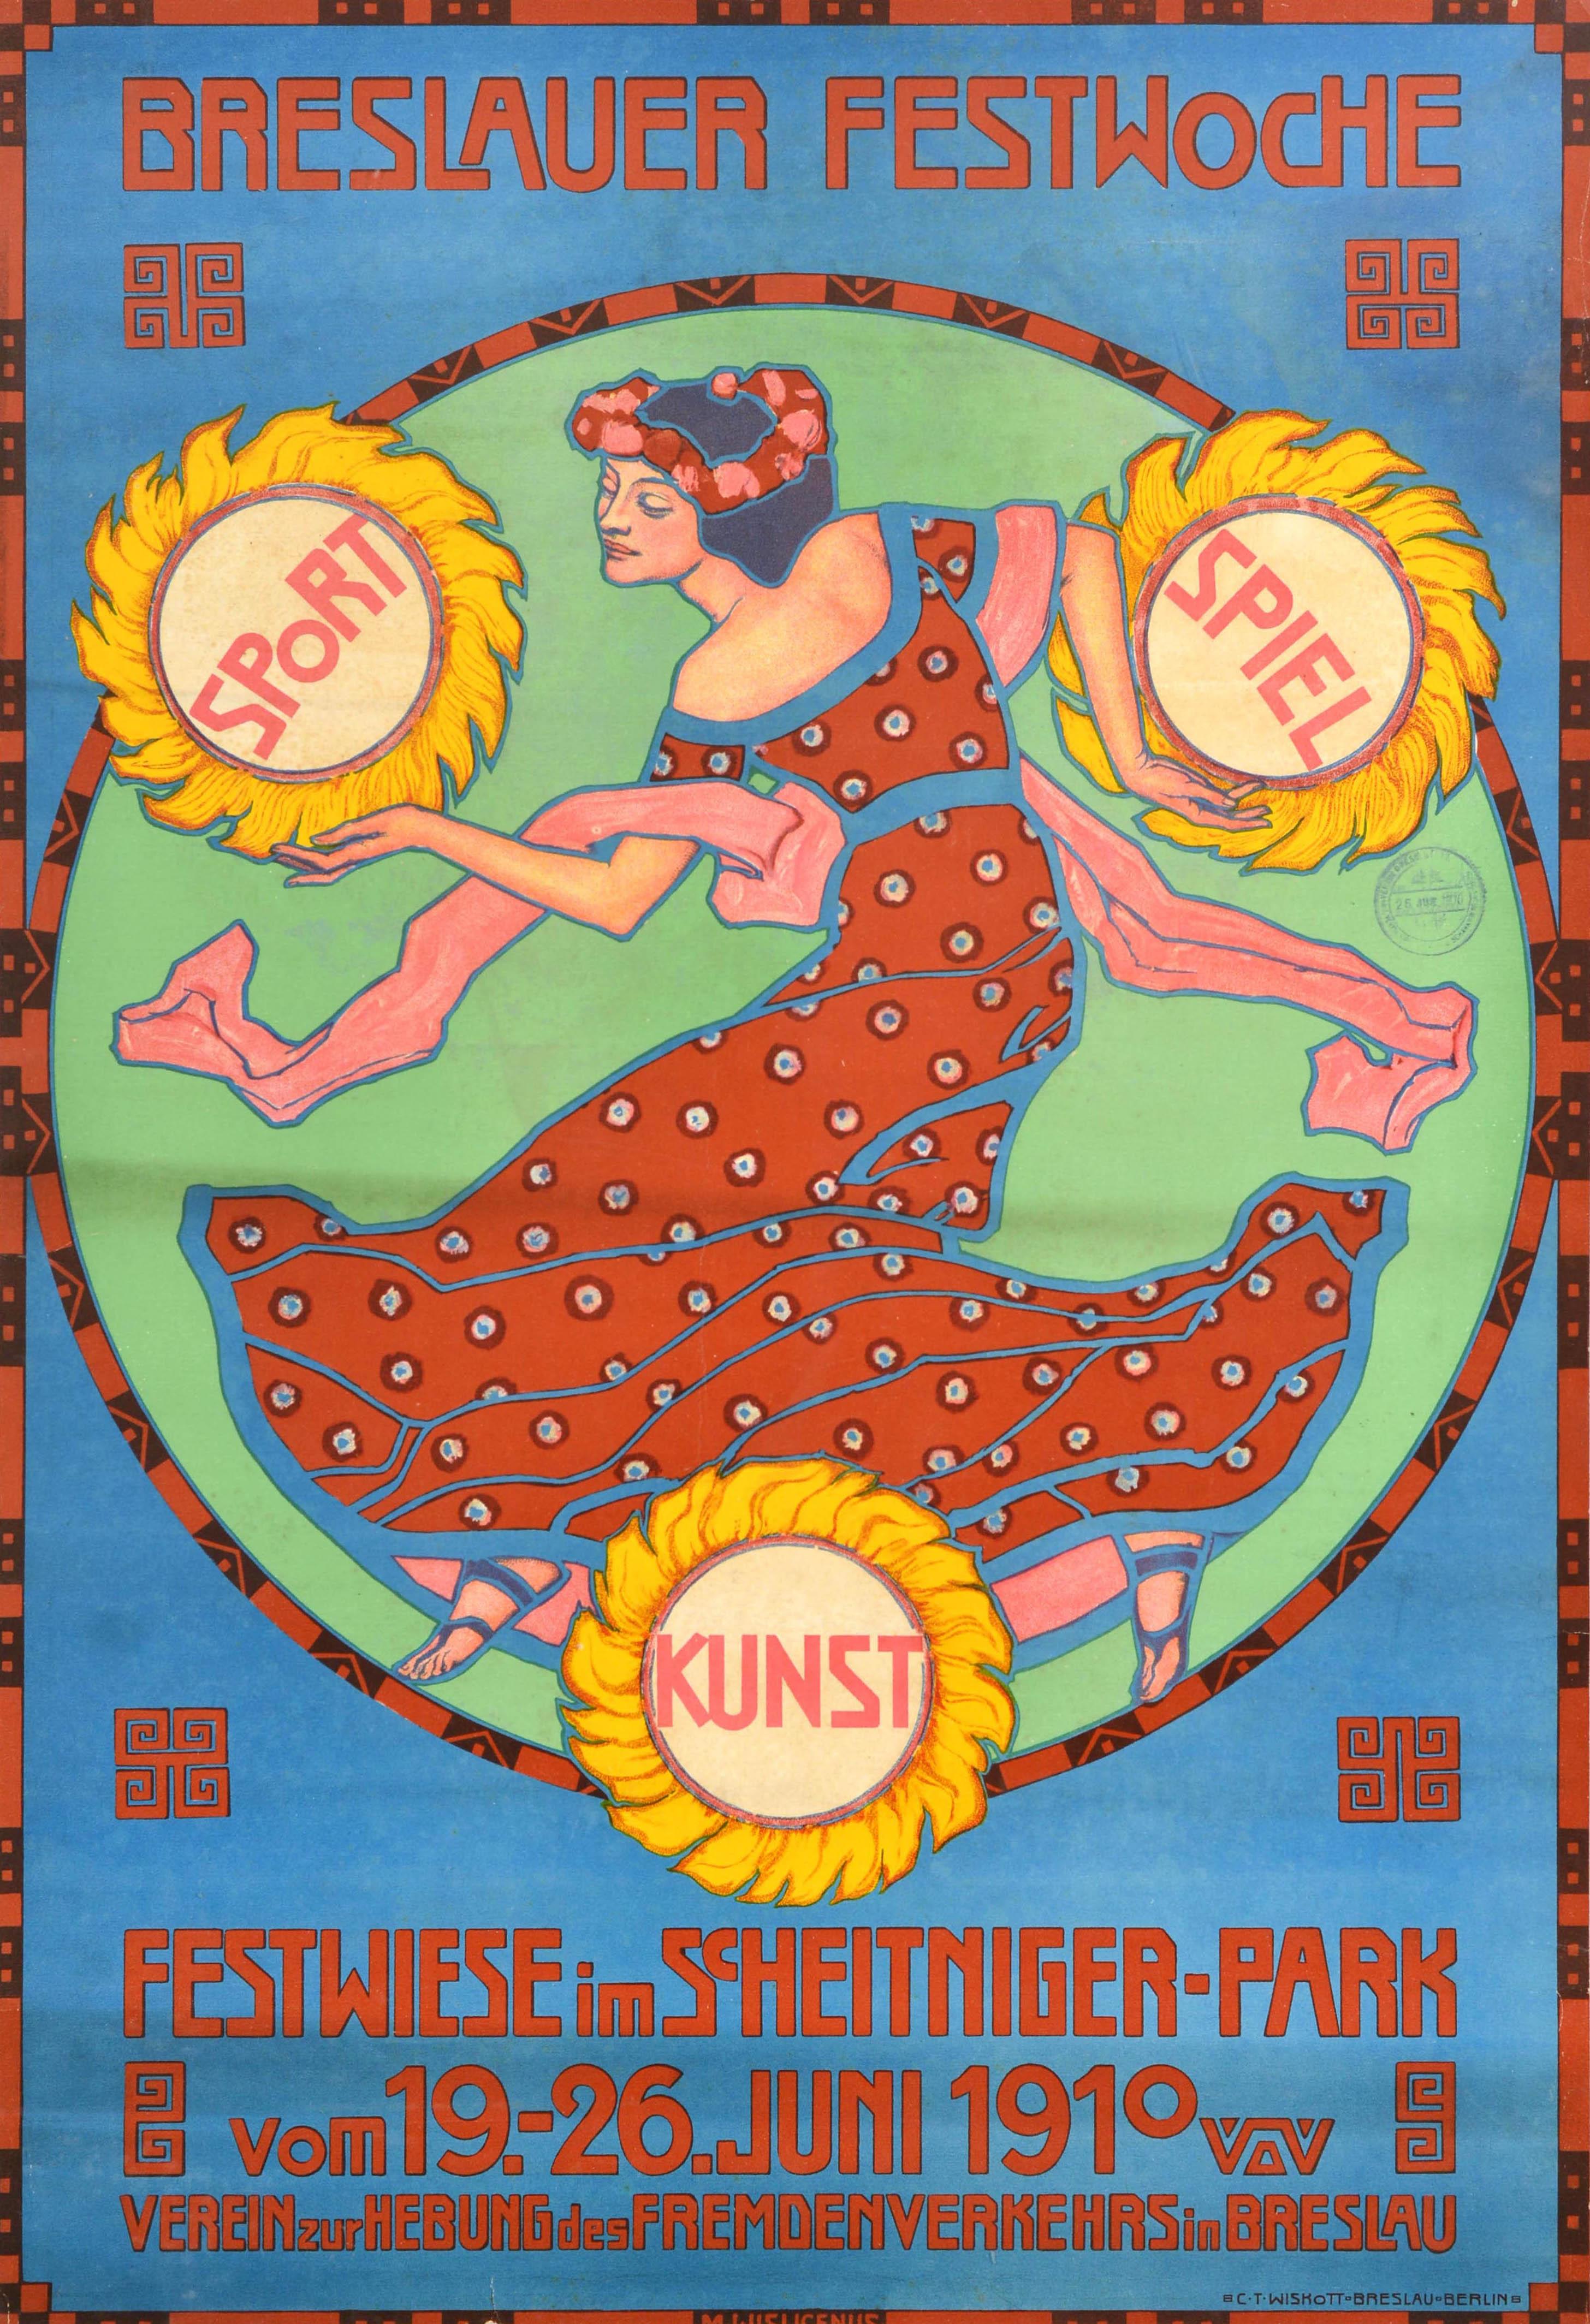 Unknown Print - Original Antique Advertising Poster Wroclaw Festival Week Breslauer Festwoche